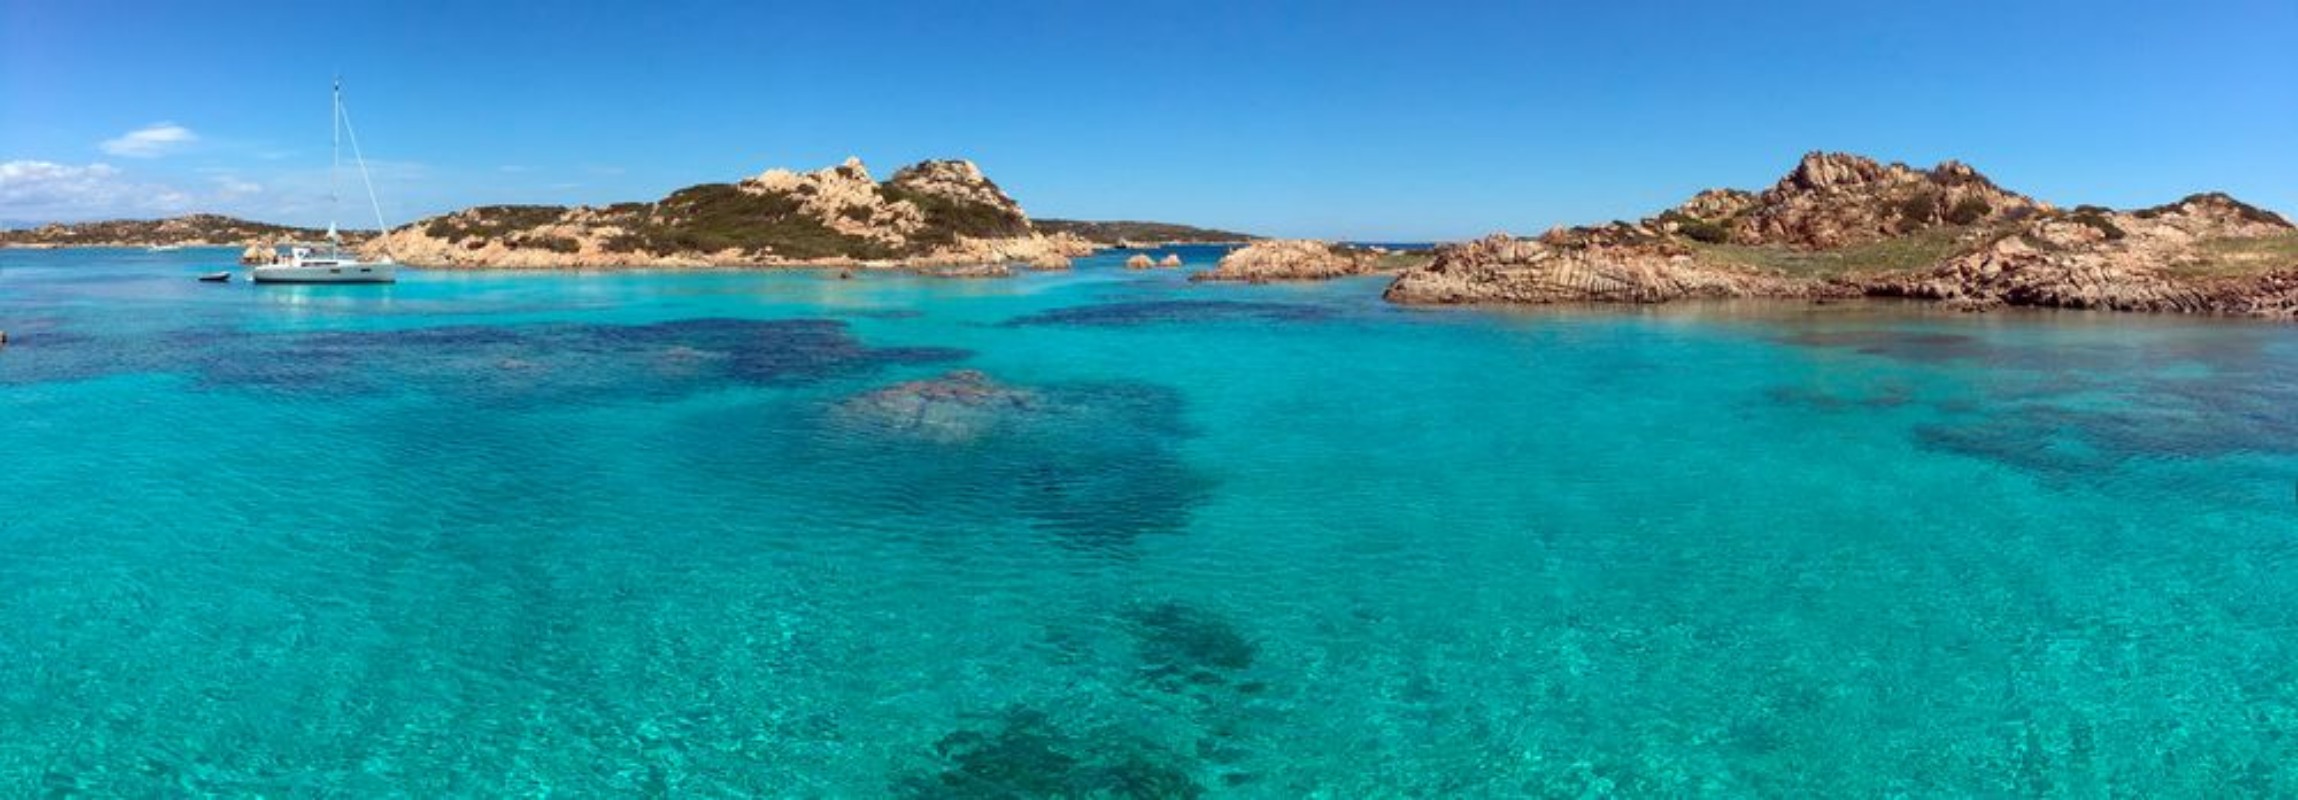 Picture of Maddalena Islands - Sardinia - Italy